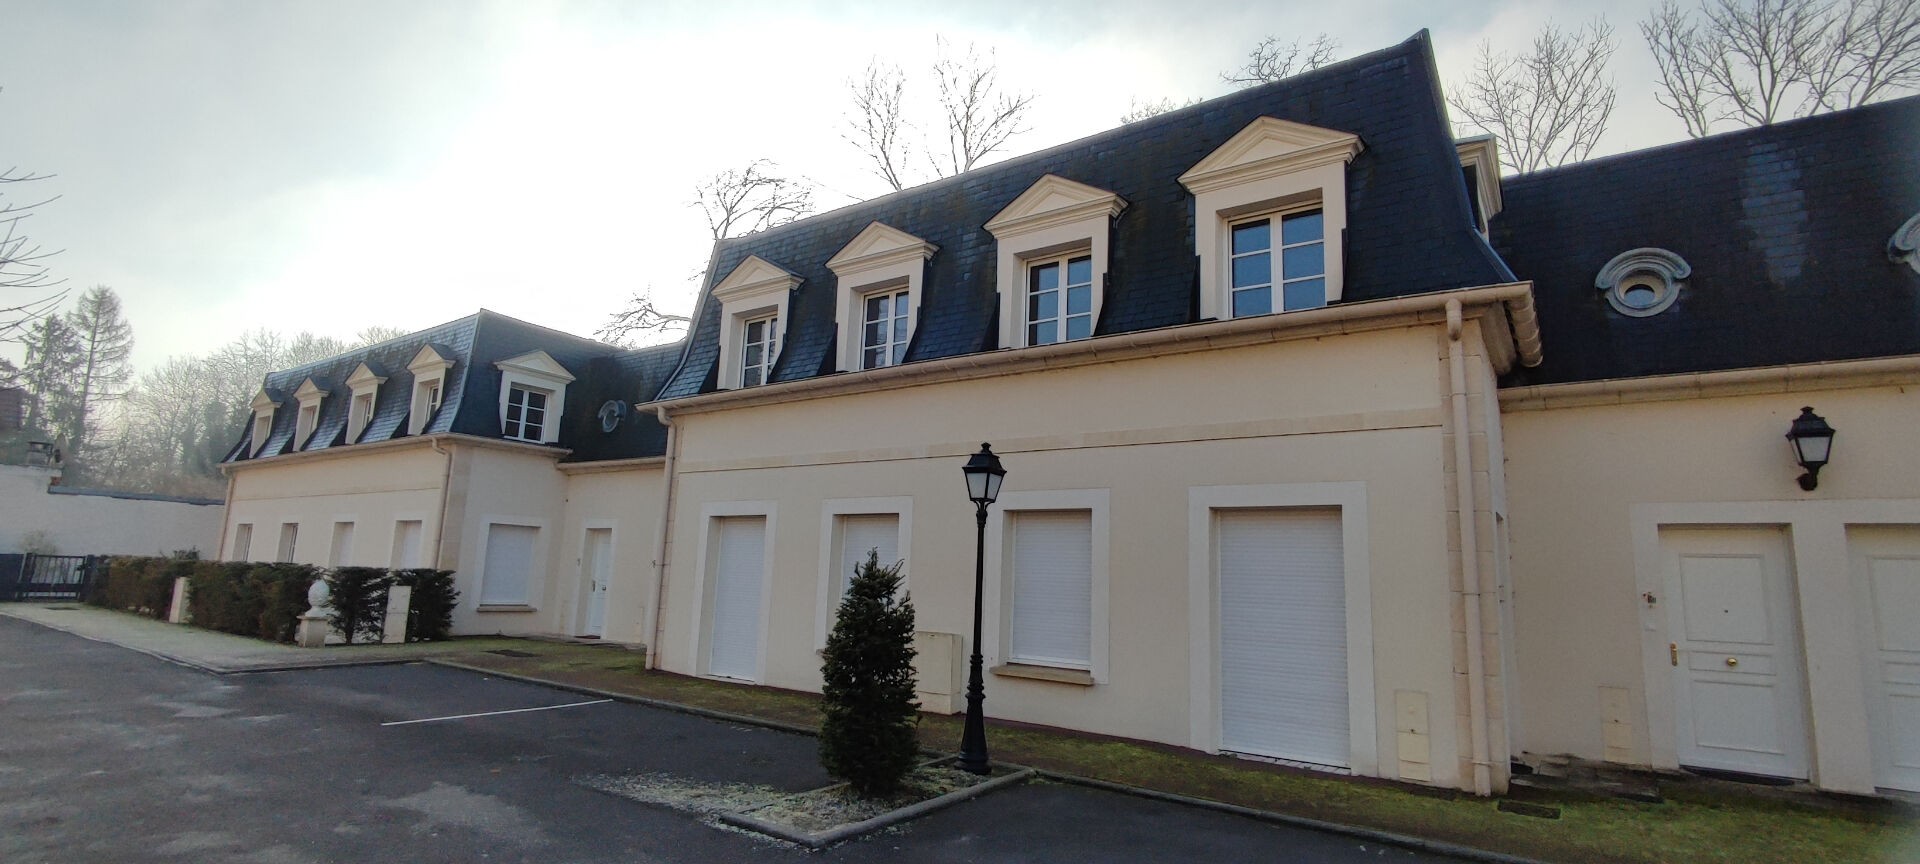 Location Garage / Parking à Vineuil-Saint-Firmin 0 pièce